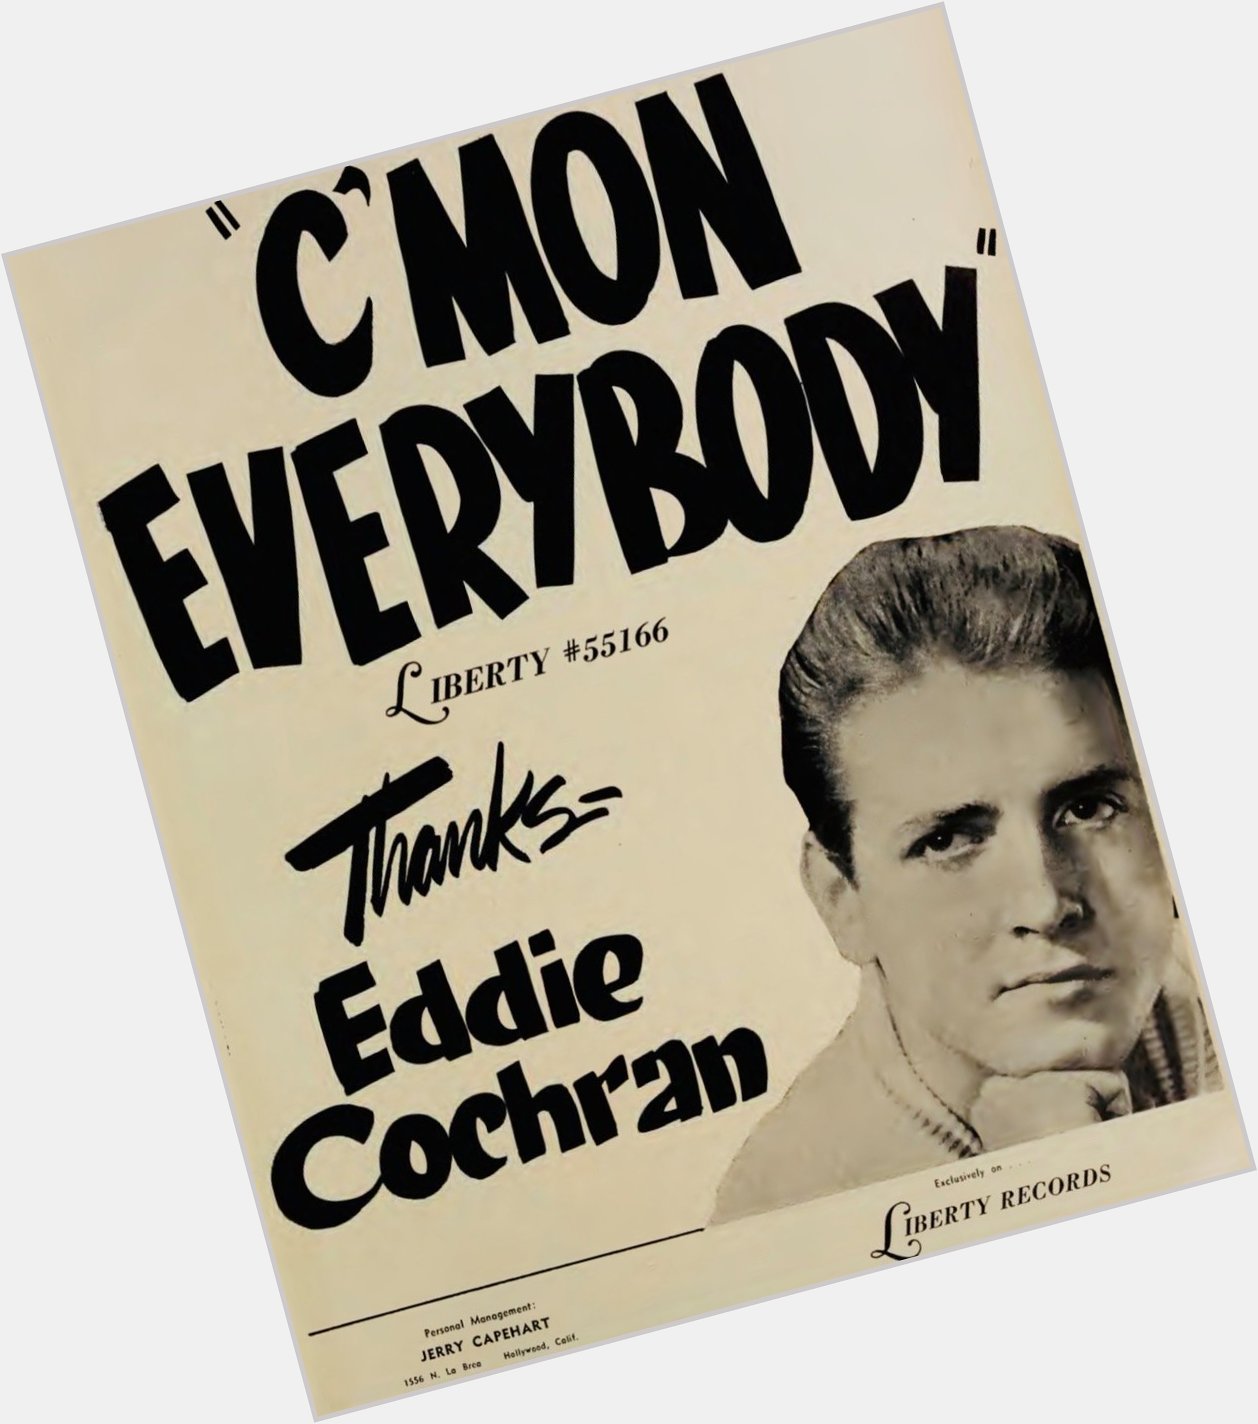 Happy Birthday, Eddie Cochran! You died too young. You were truly \"Somethin\ Else\". RIP 